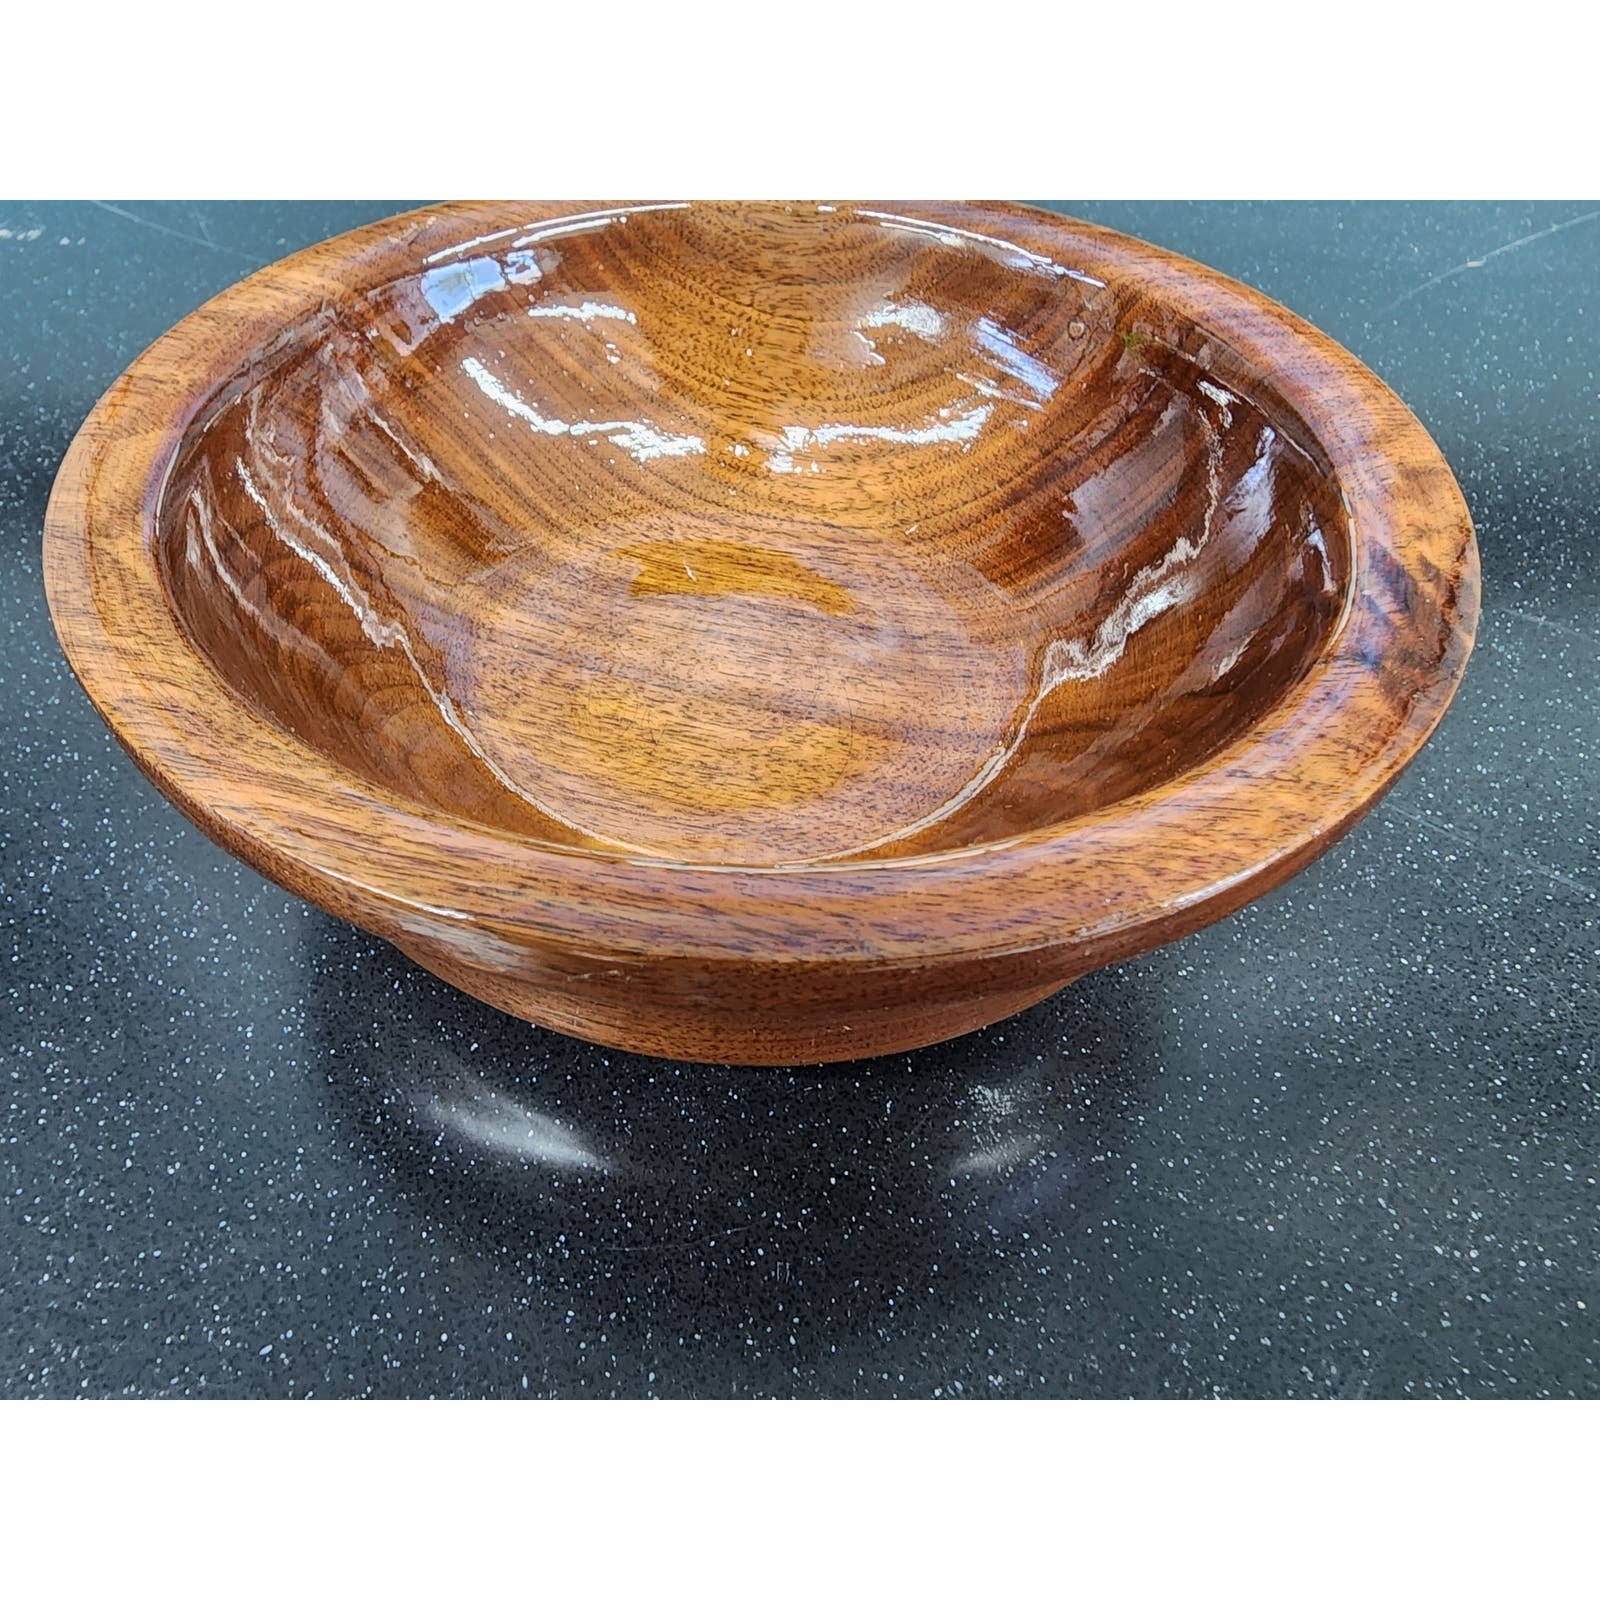 Handmade Wood Serving Bowl - Walnut 8